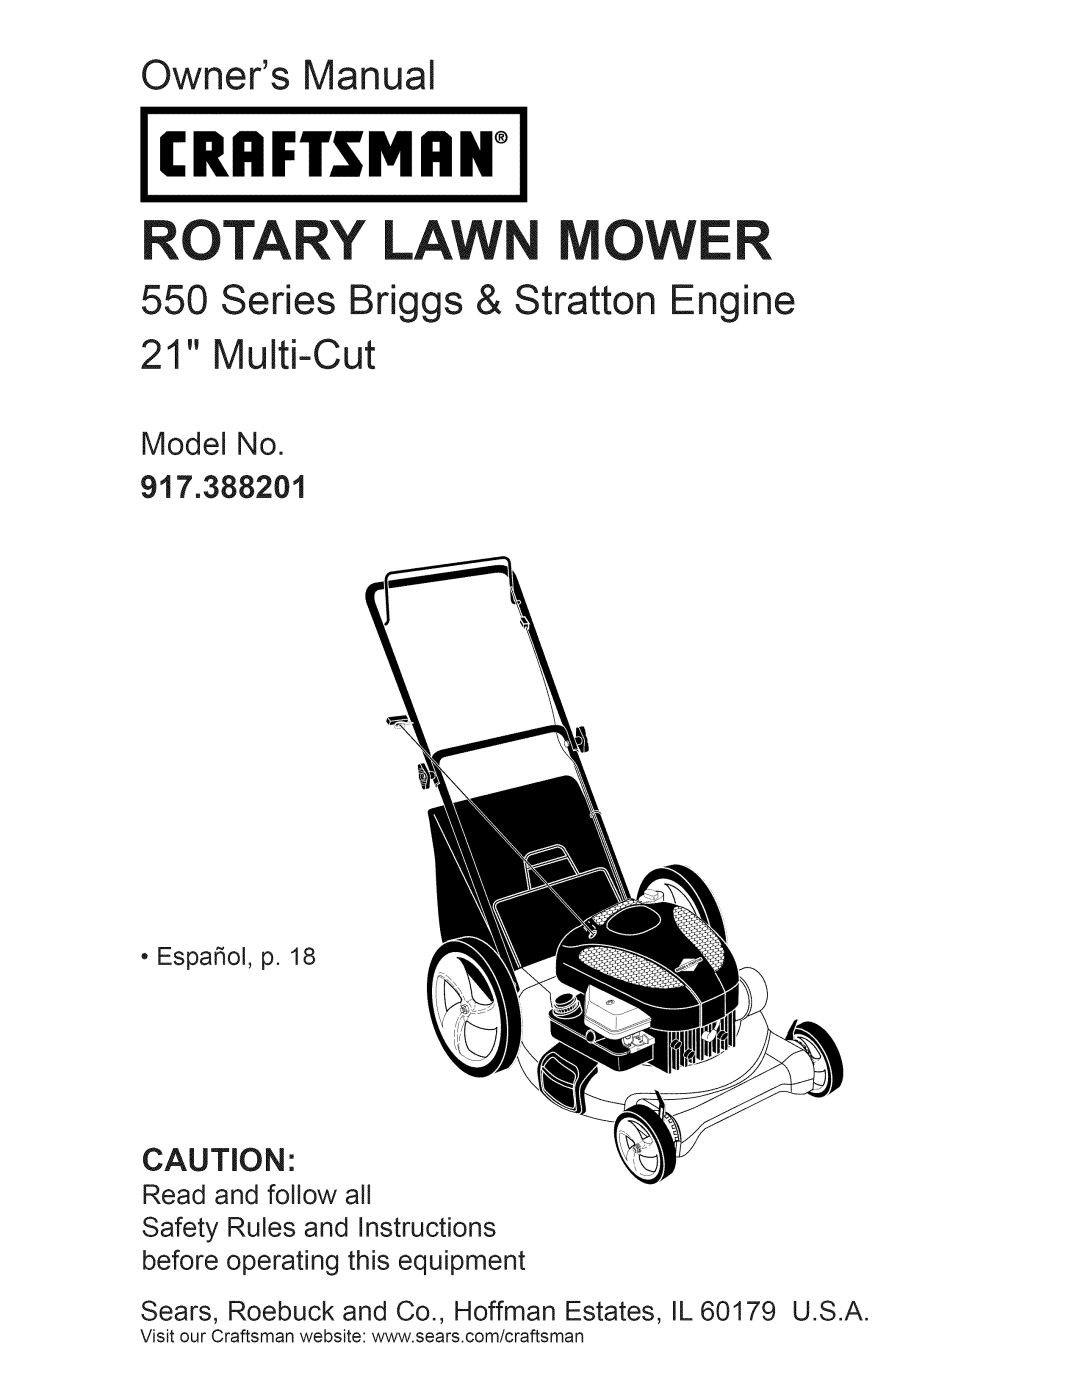 Craftsman owner manual Model No 917.388201, Craftsman, Rotary Lawn Mower, Series Briggs & Stratton Engine 21 Multi-Cut 